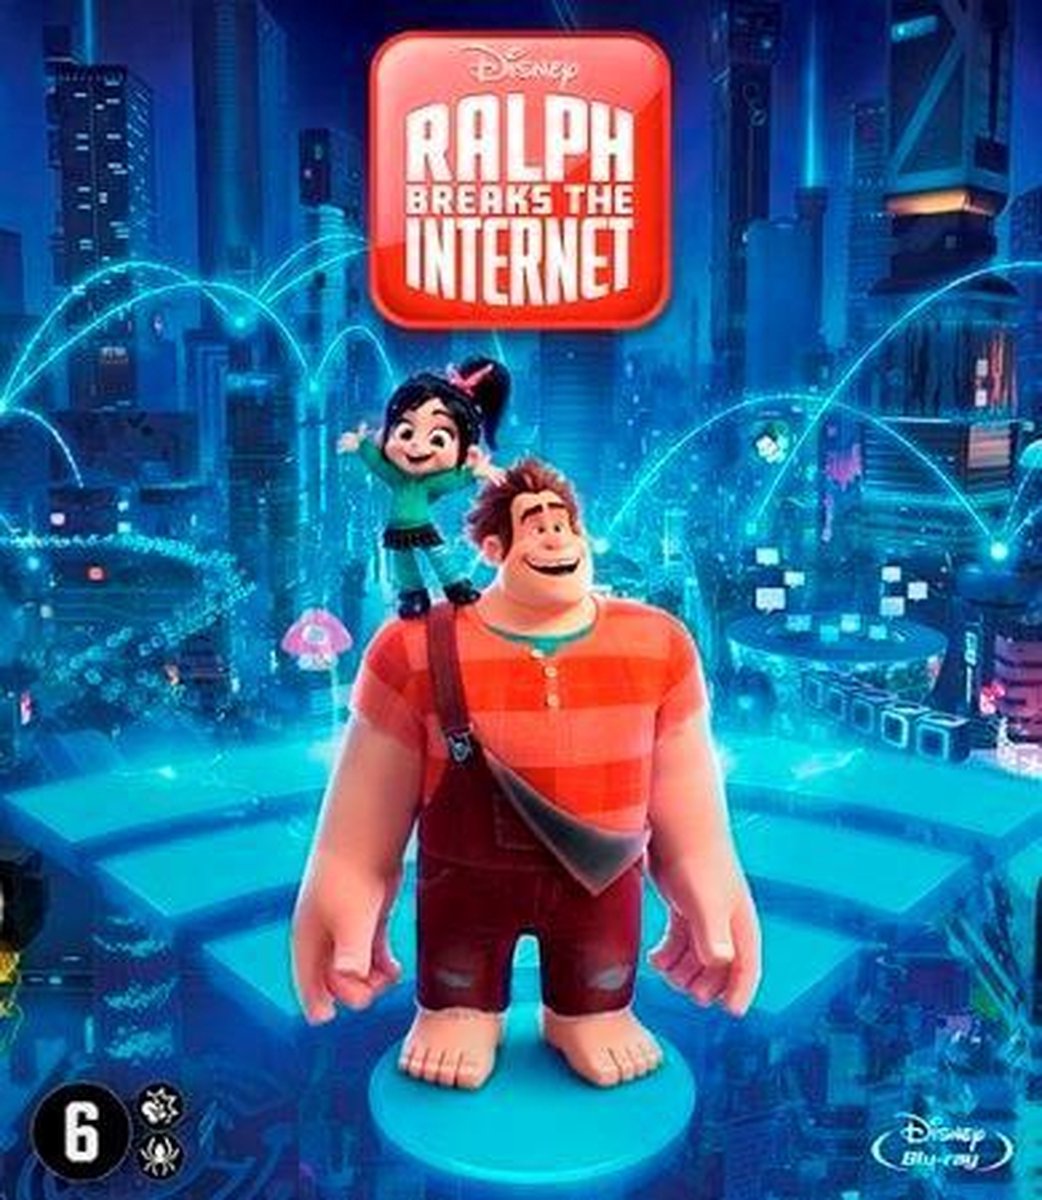 Ralph Breaks The Internet (Blu-ray) - Disney Movies